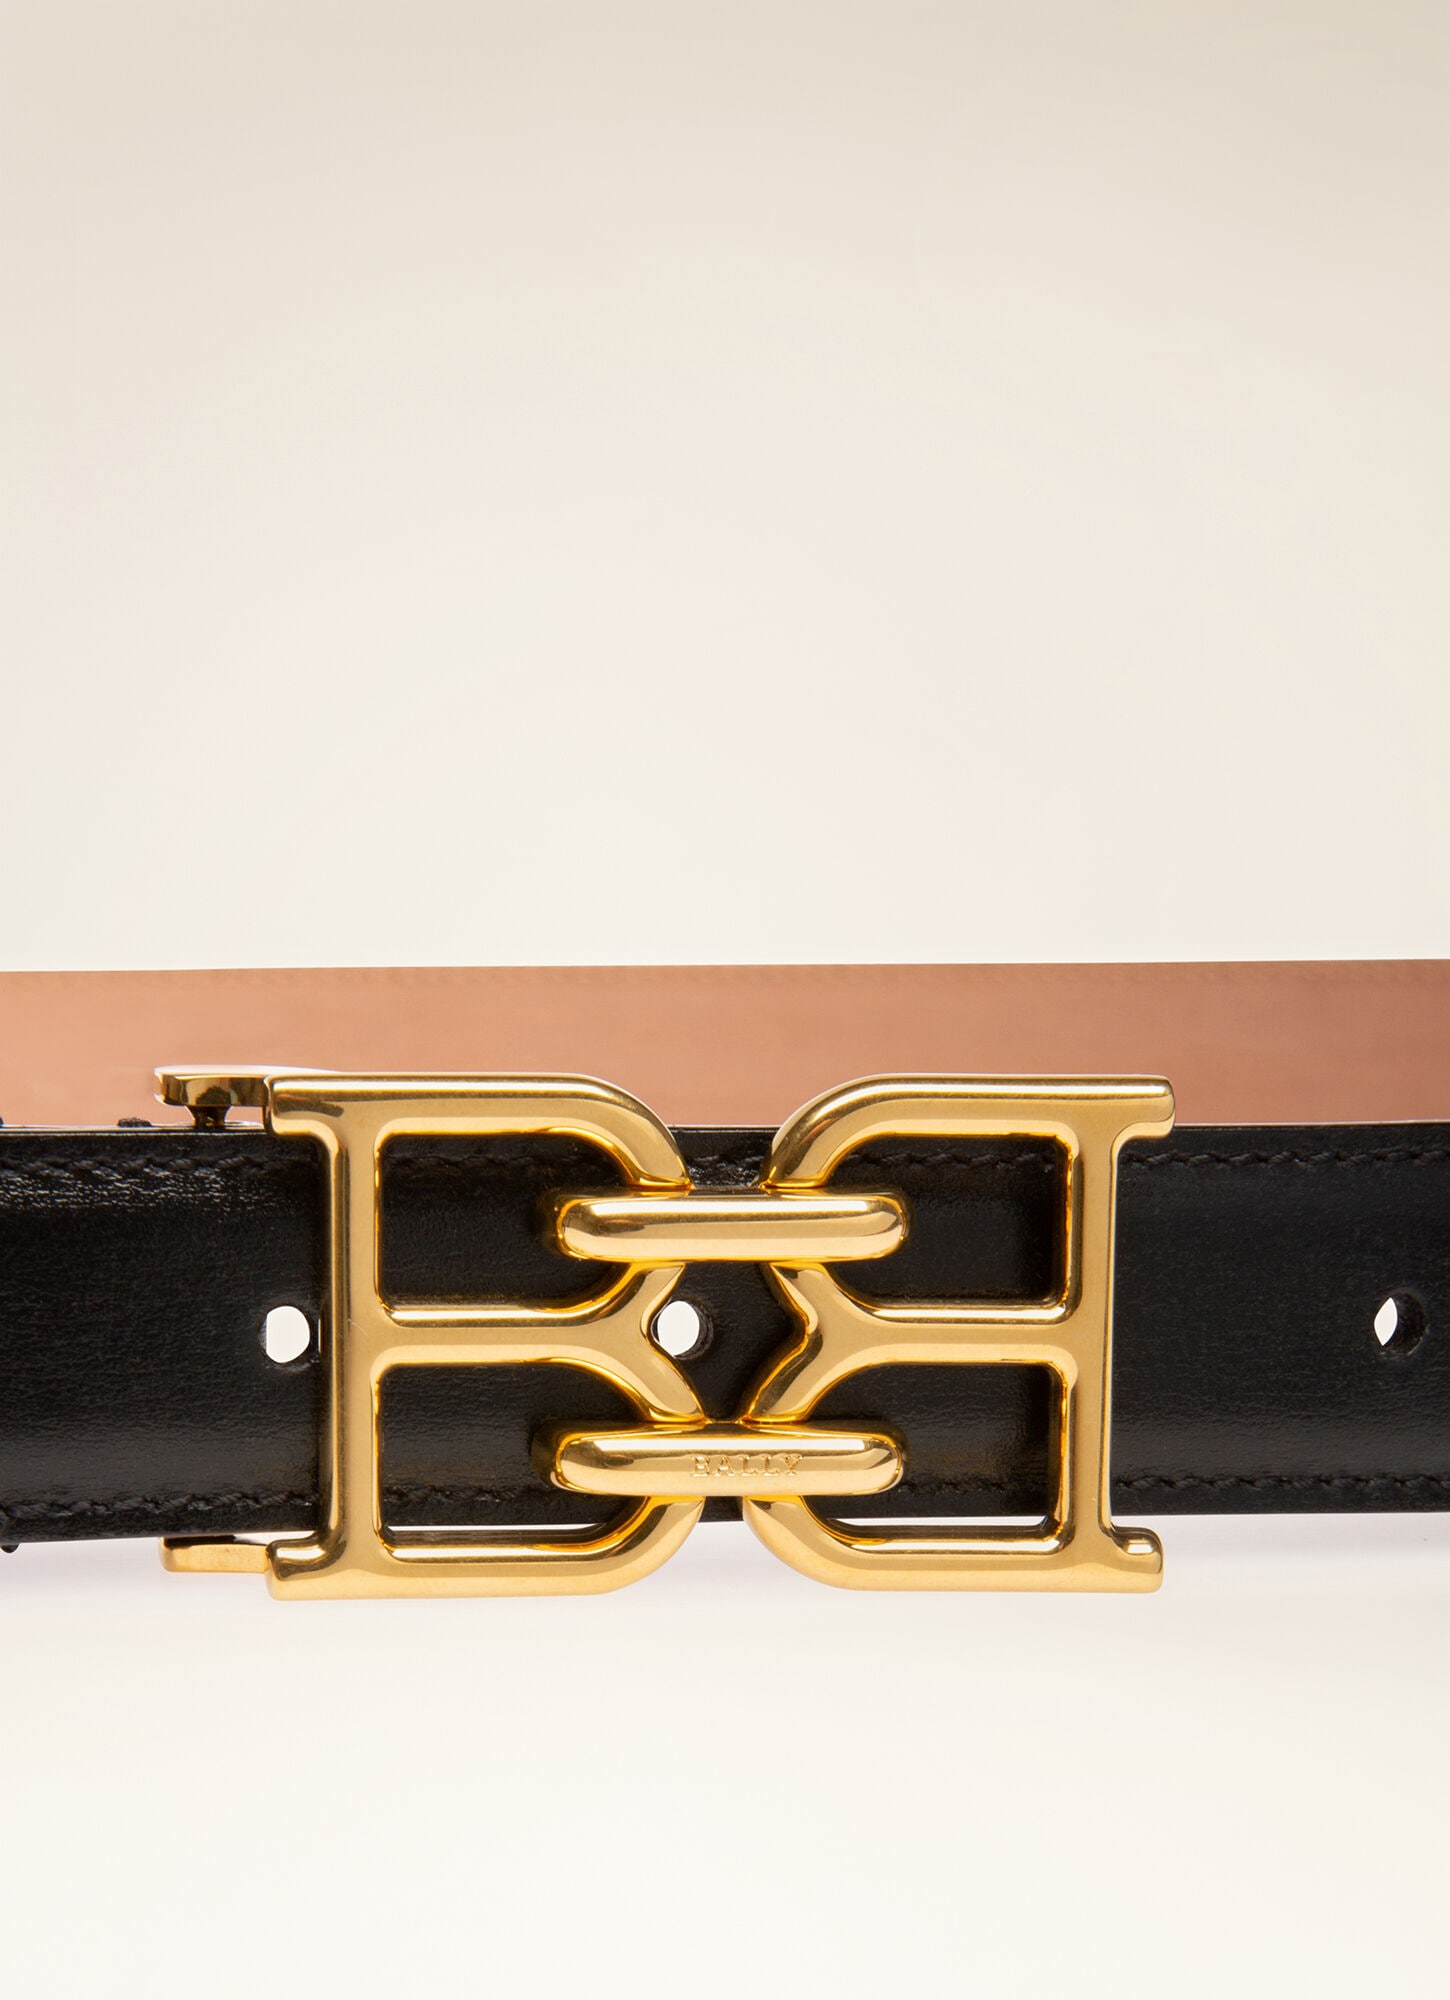 Bally Bally black leather belt gold buckle 